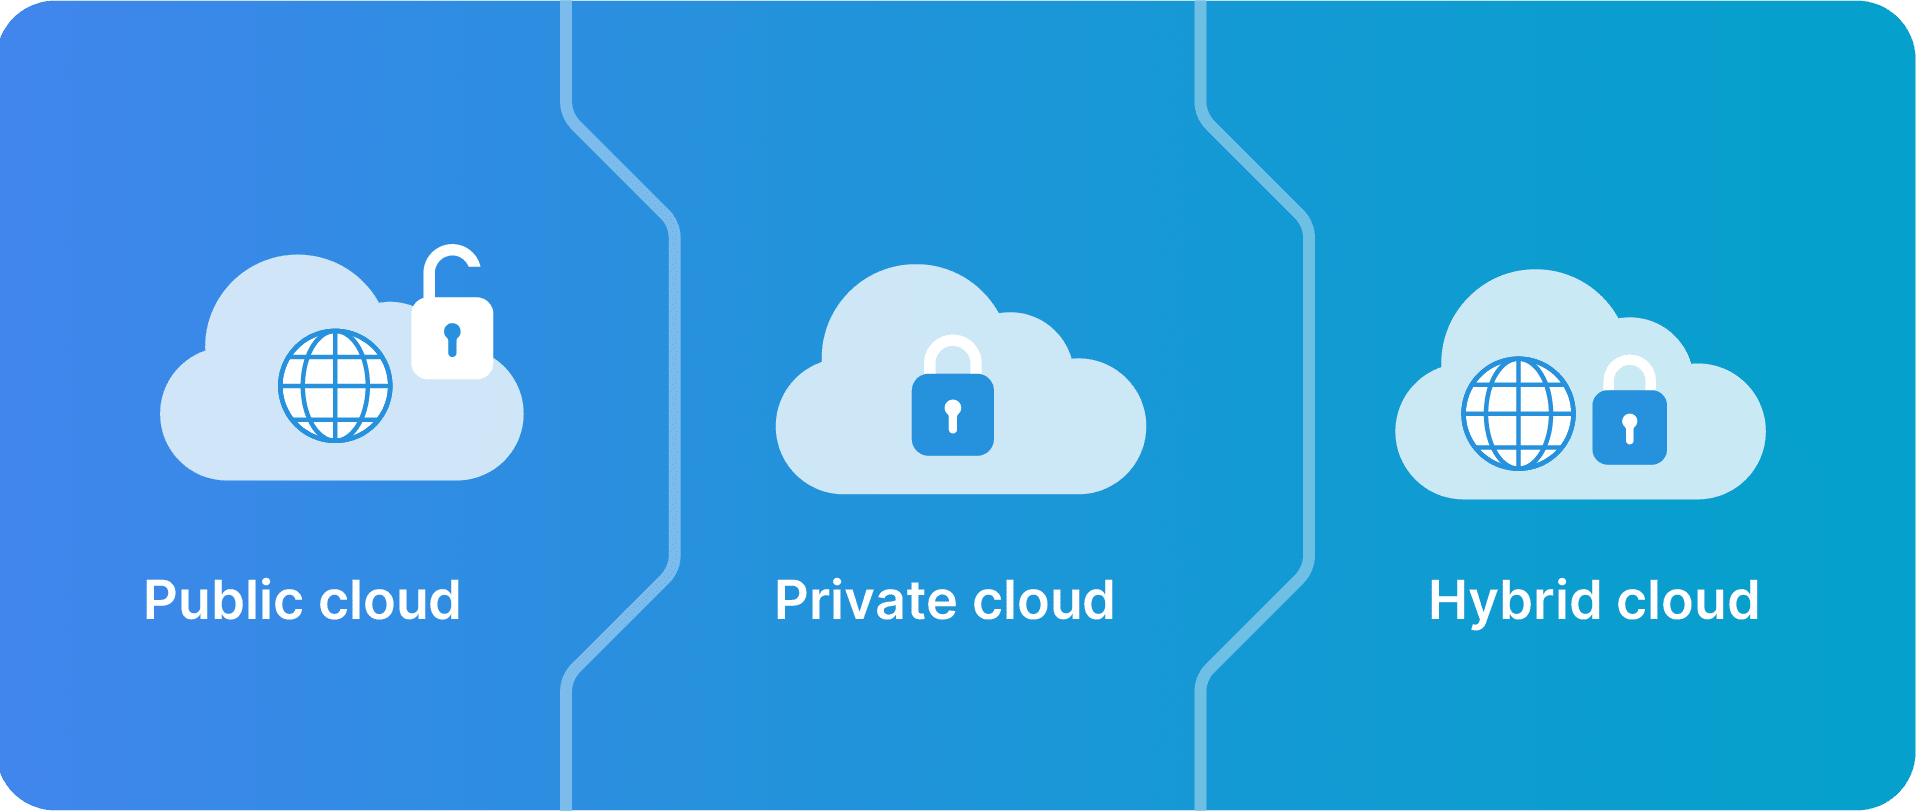 Public vs private vs. hybrid clouds.